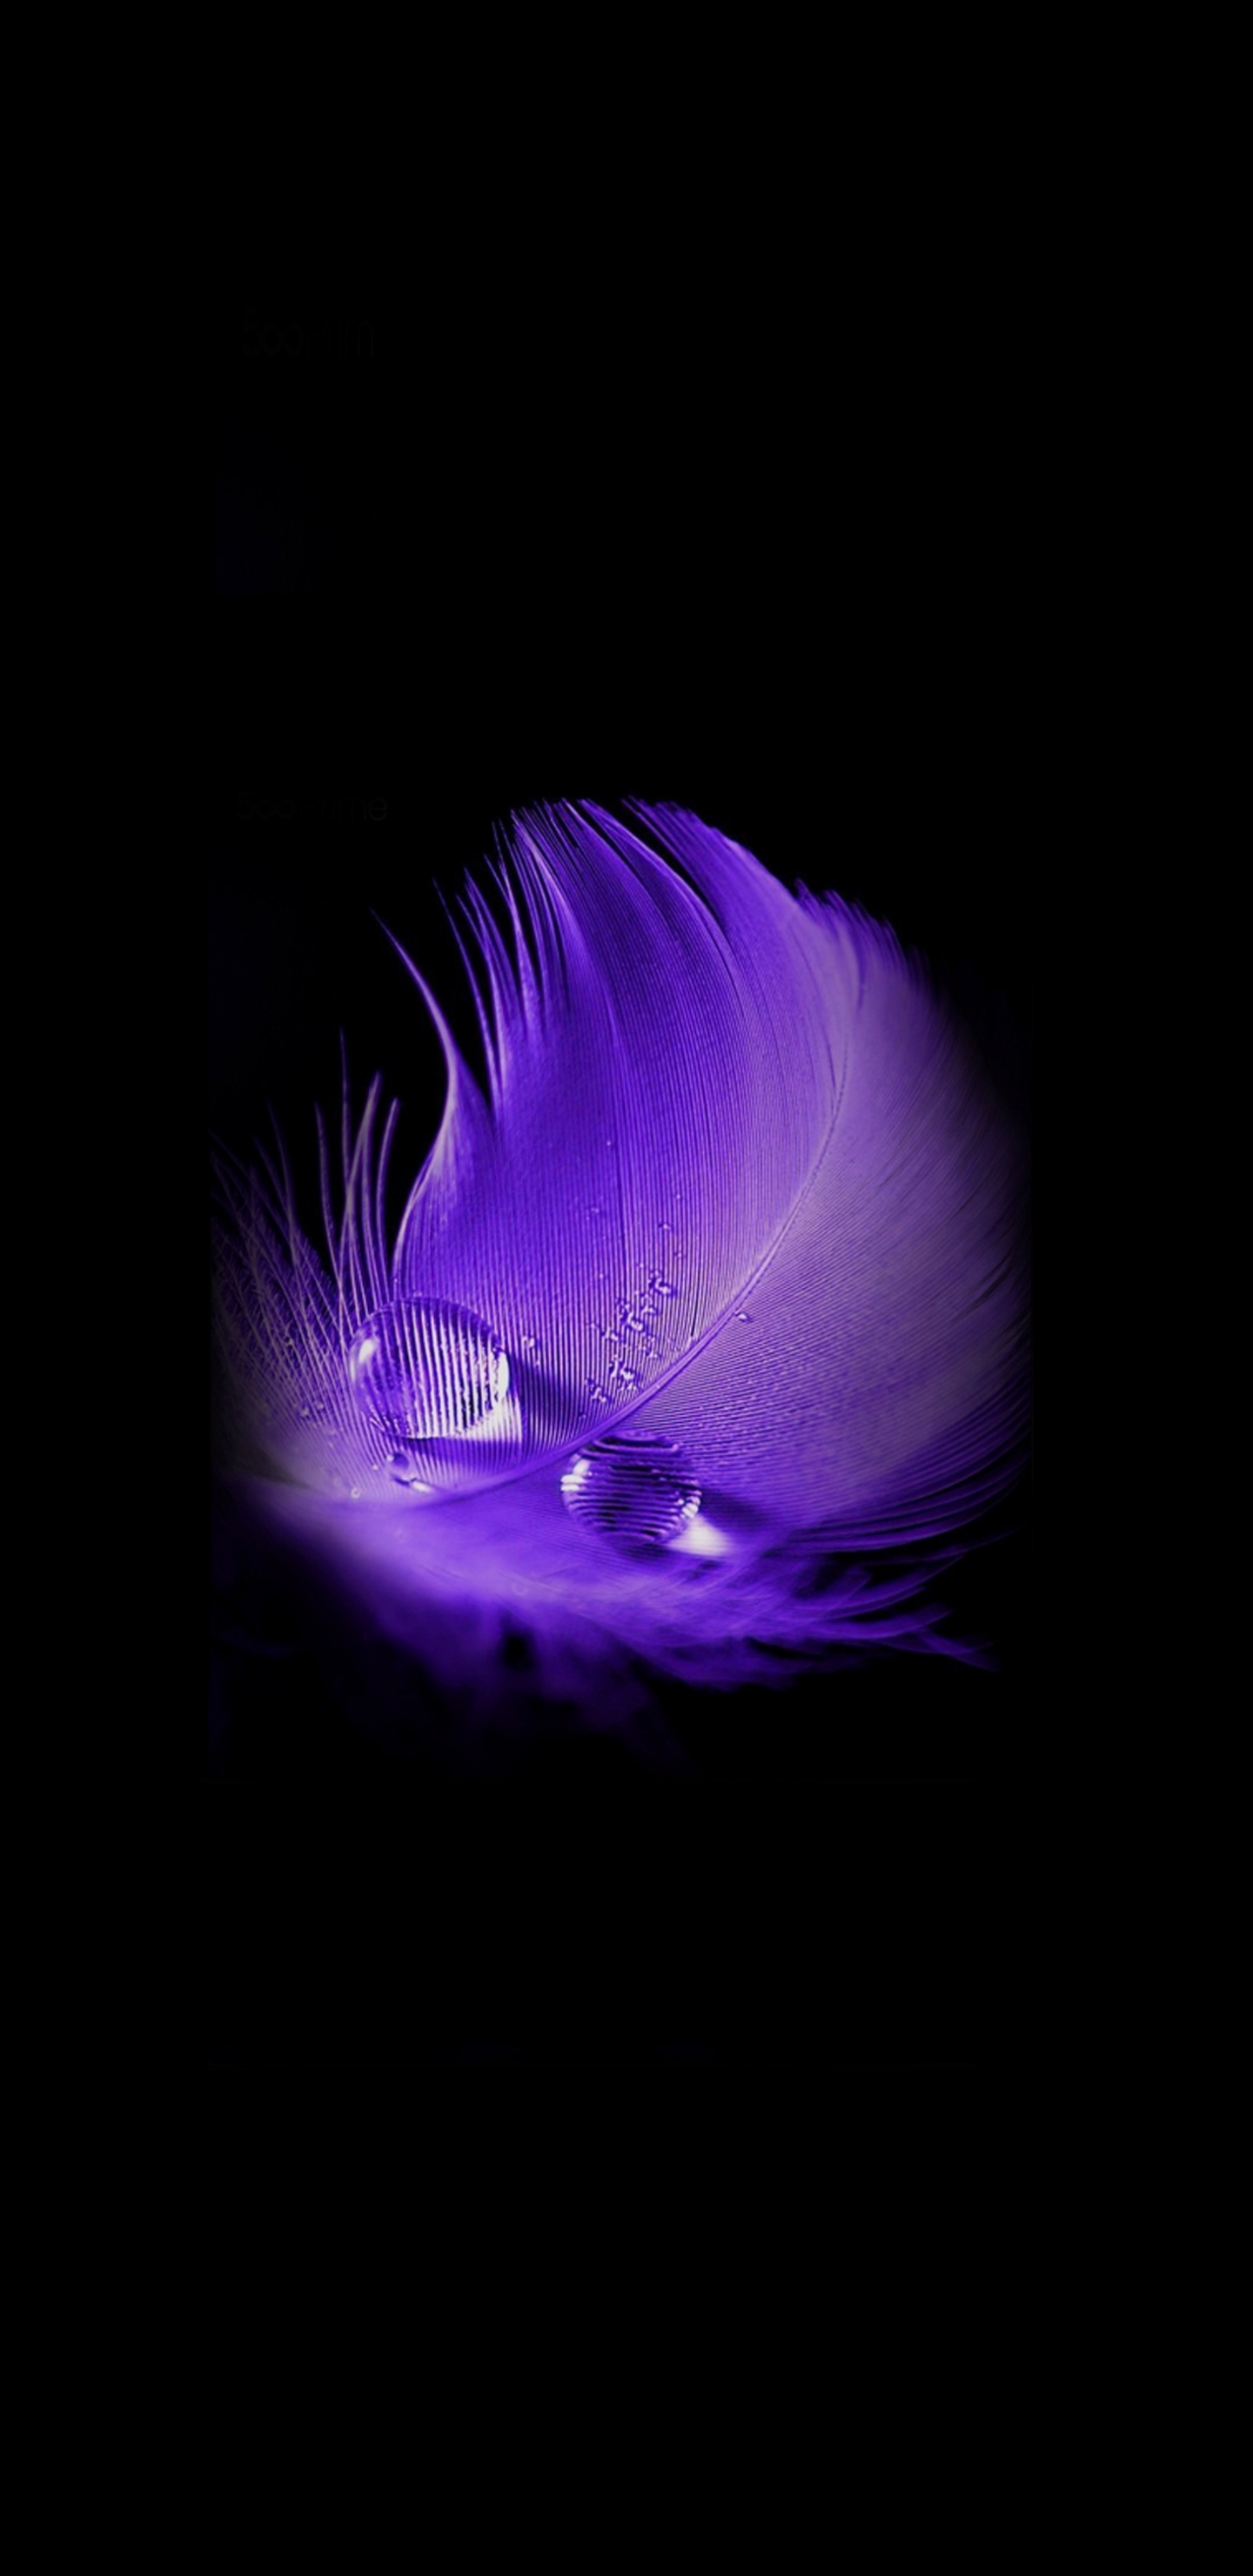 Download wallpaper 1440x2960 purple feather, water drop, minimal, portrait, samsung  galaxy s8, samsung galaxy s8 plus, 1440x2960 hd background, 22182